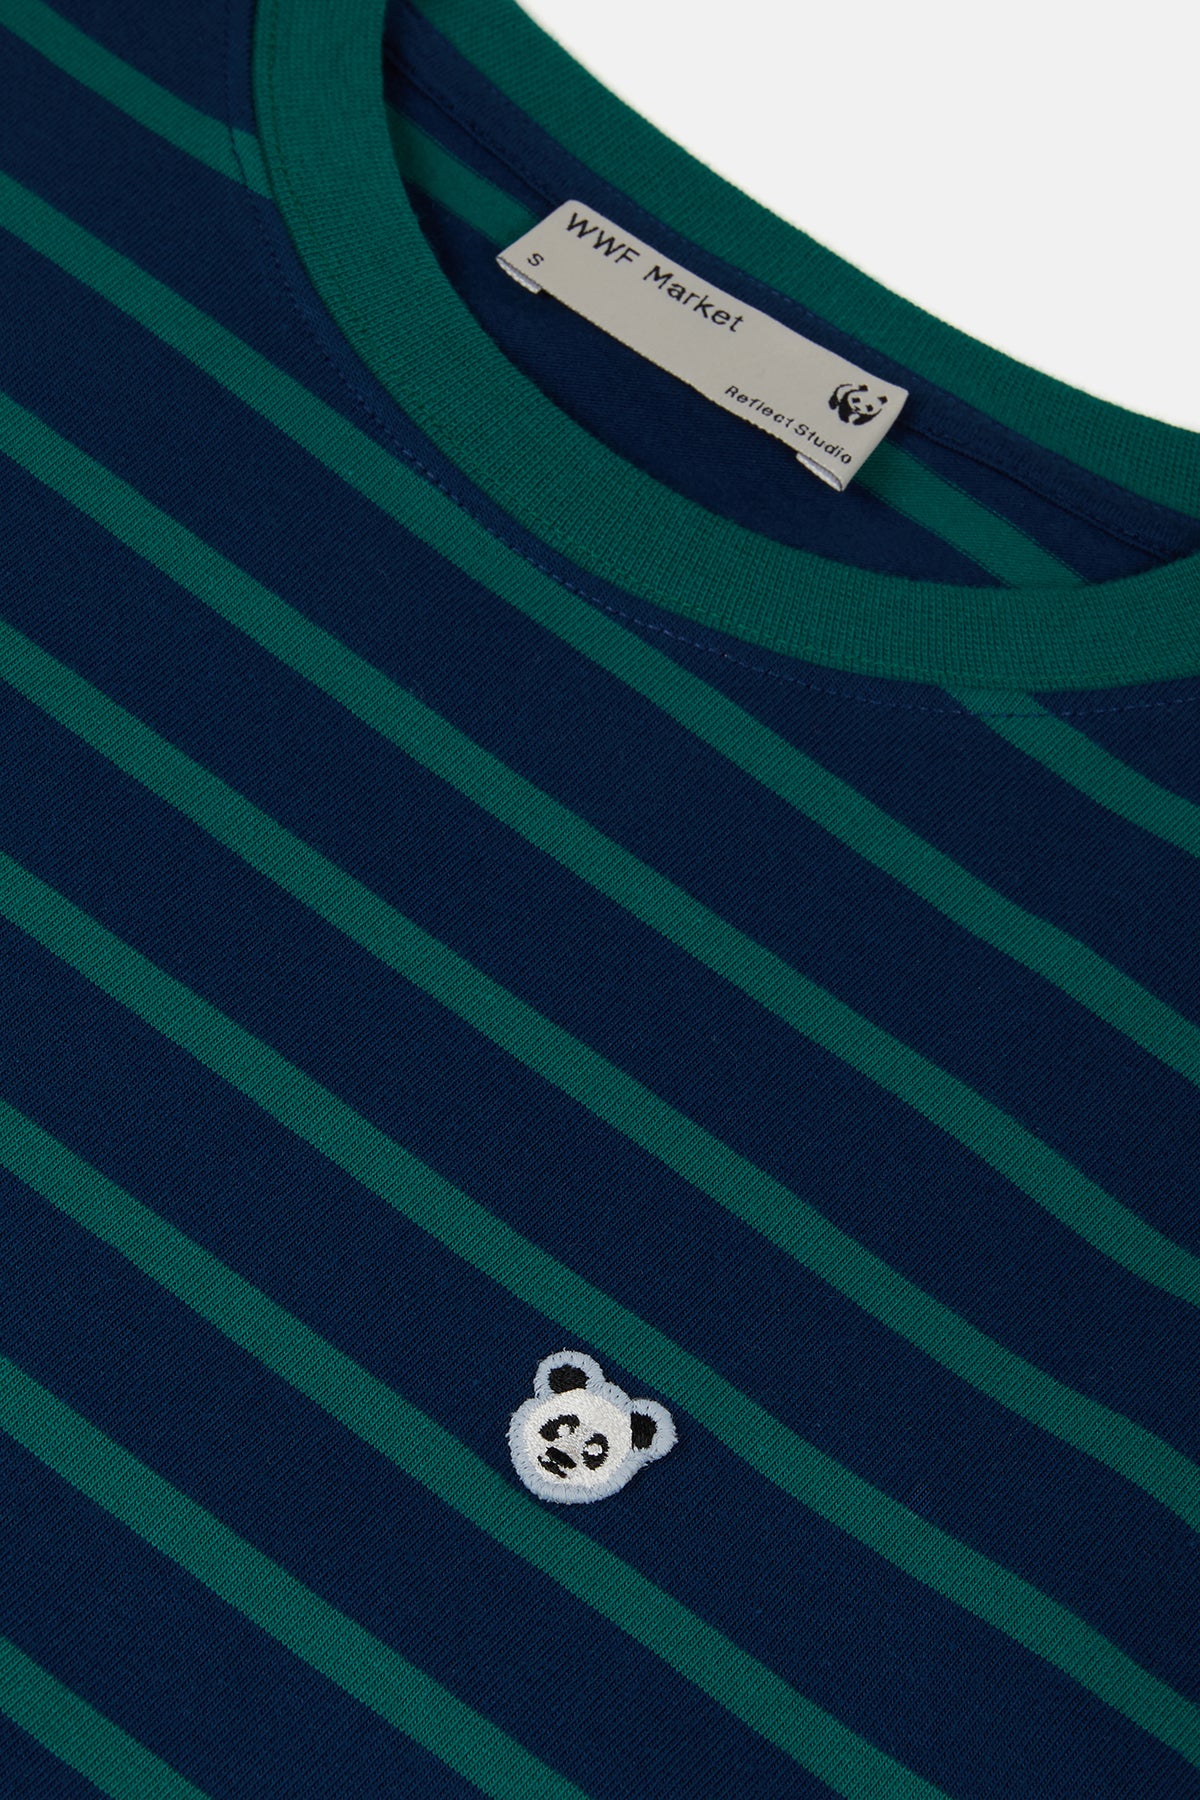 Panda Supreme  Çizgili Uzun Kollu T-Shirt - Yeşil/Lacivert